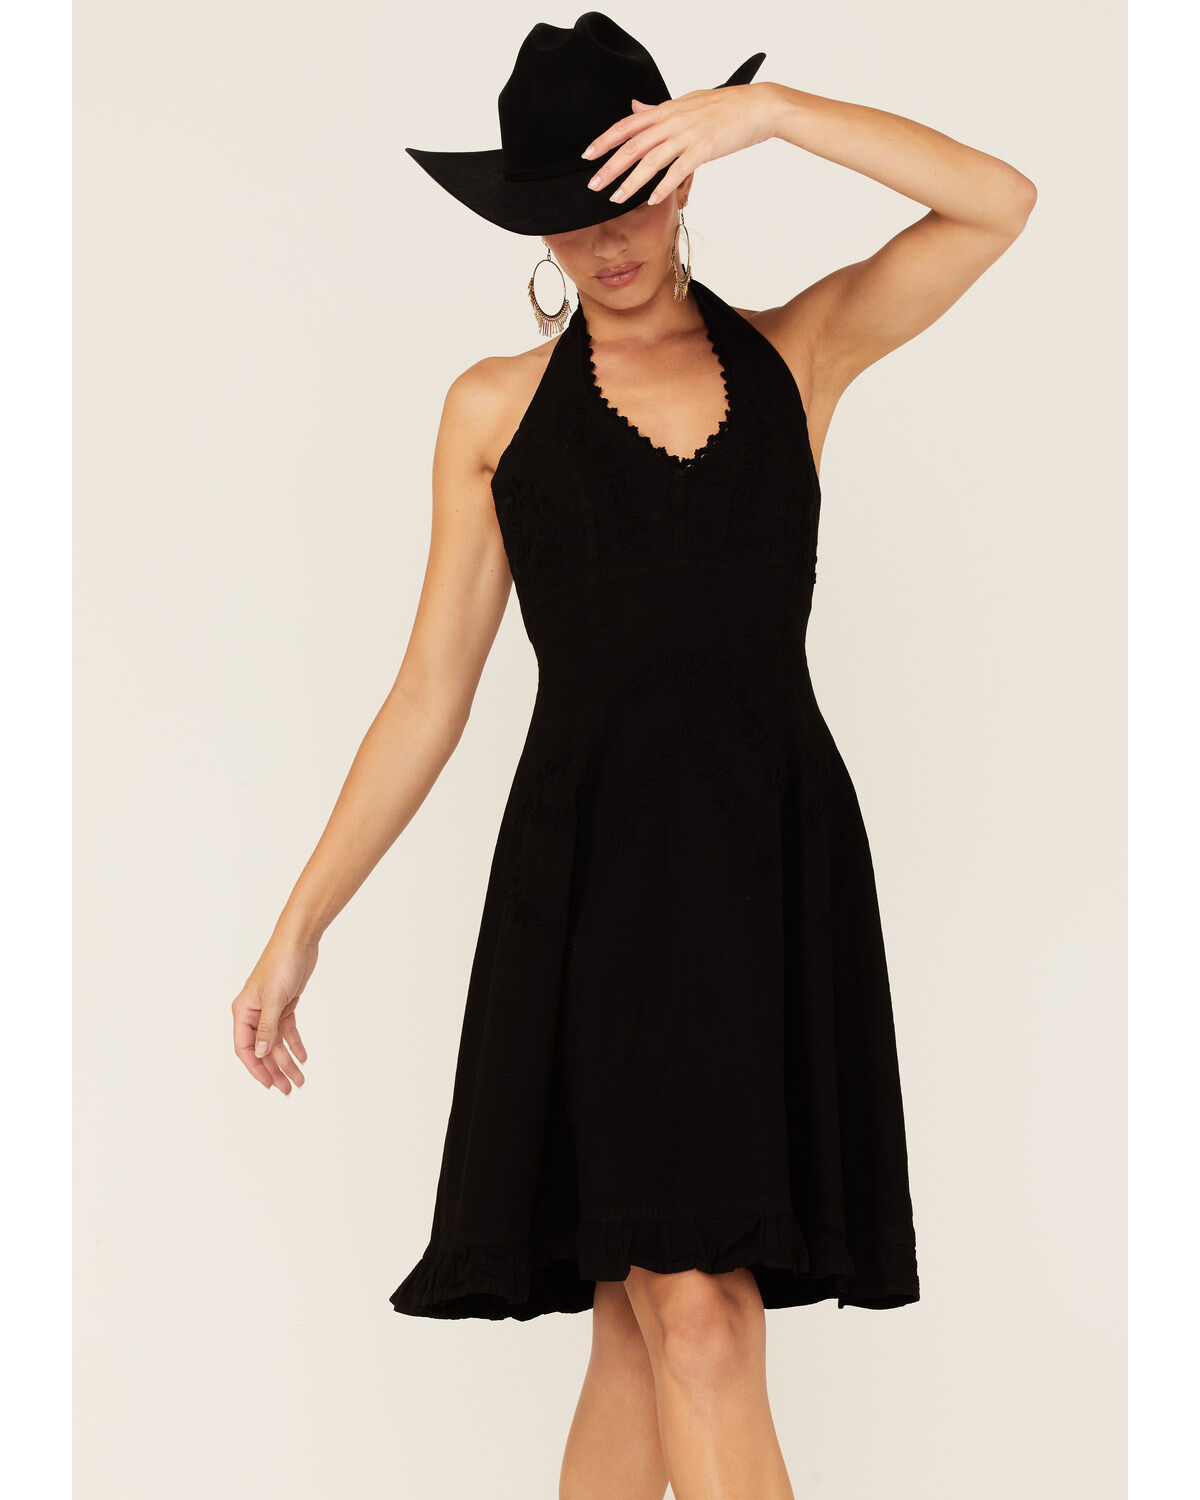 halter black dress